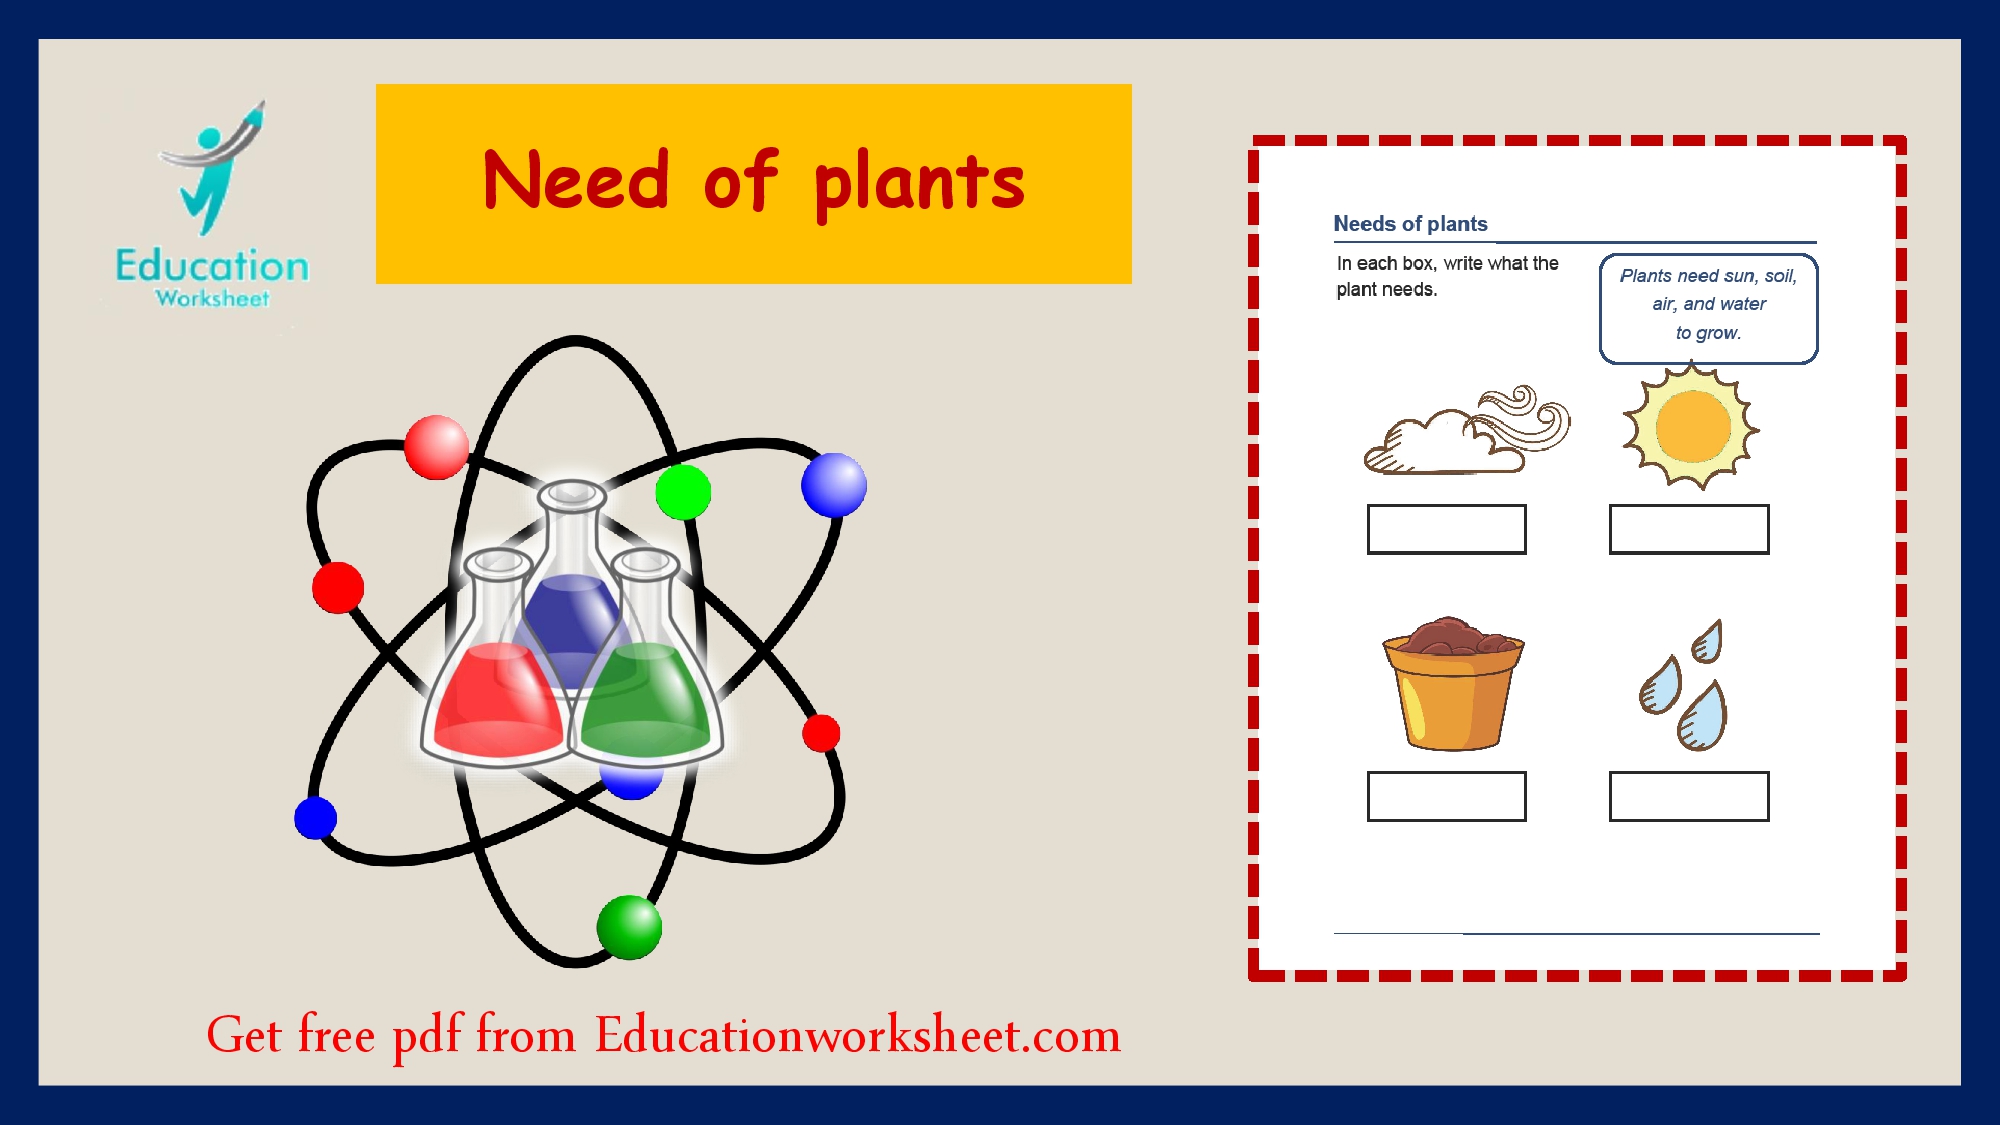 Needs of plants worksheet for kids